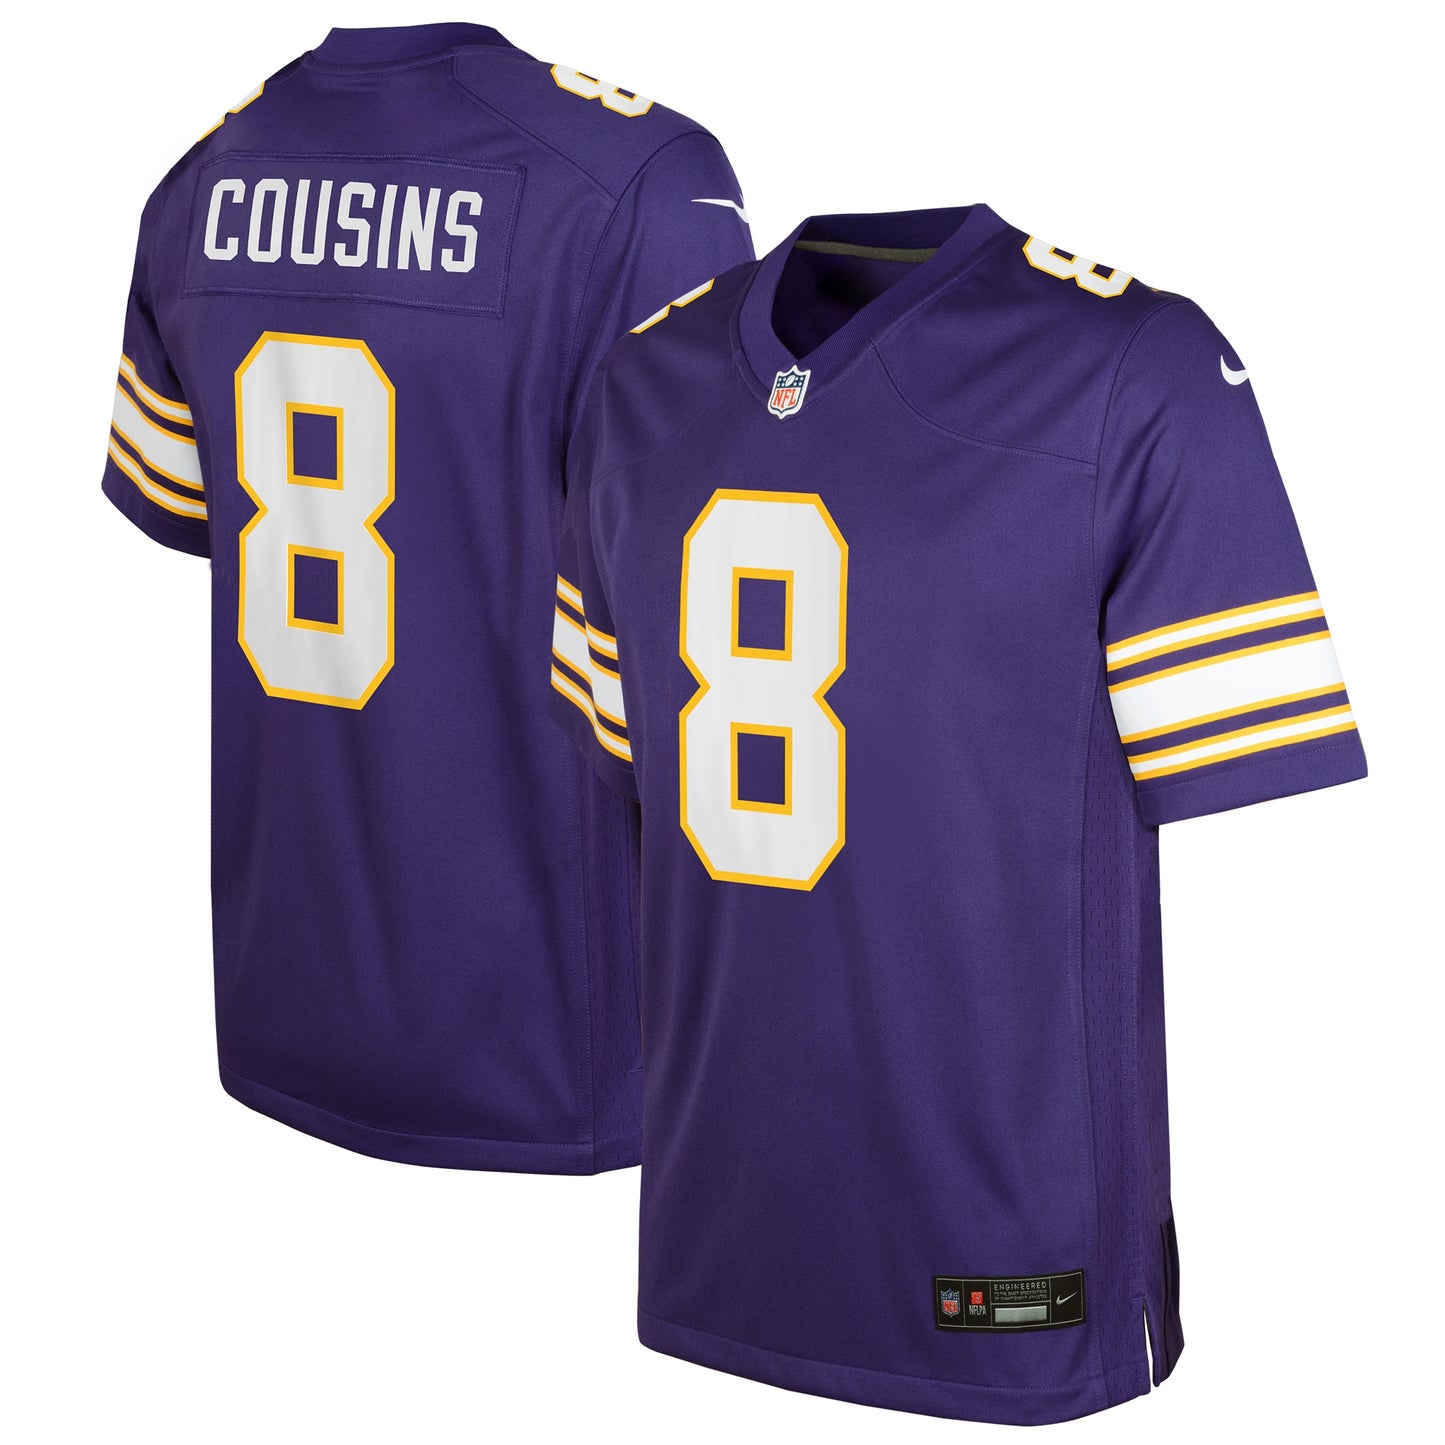 Kirk Cousins Minnesota Vikings Nike Youth Game Jersey - Purple